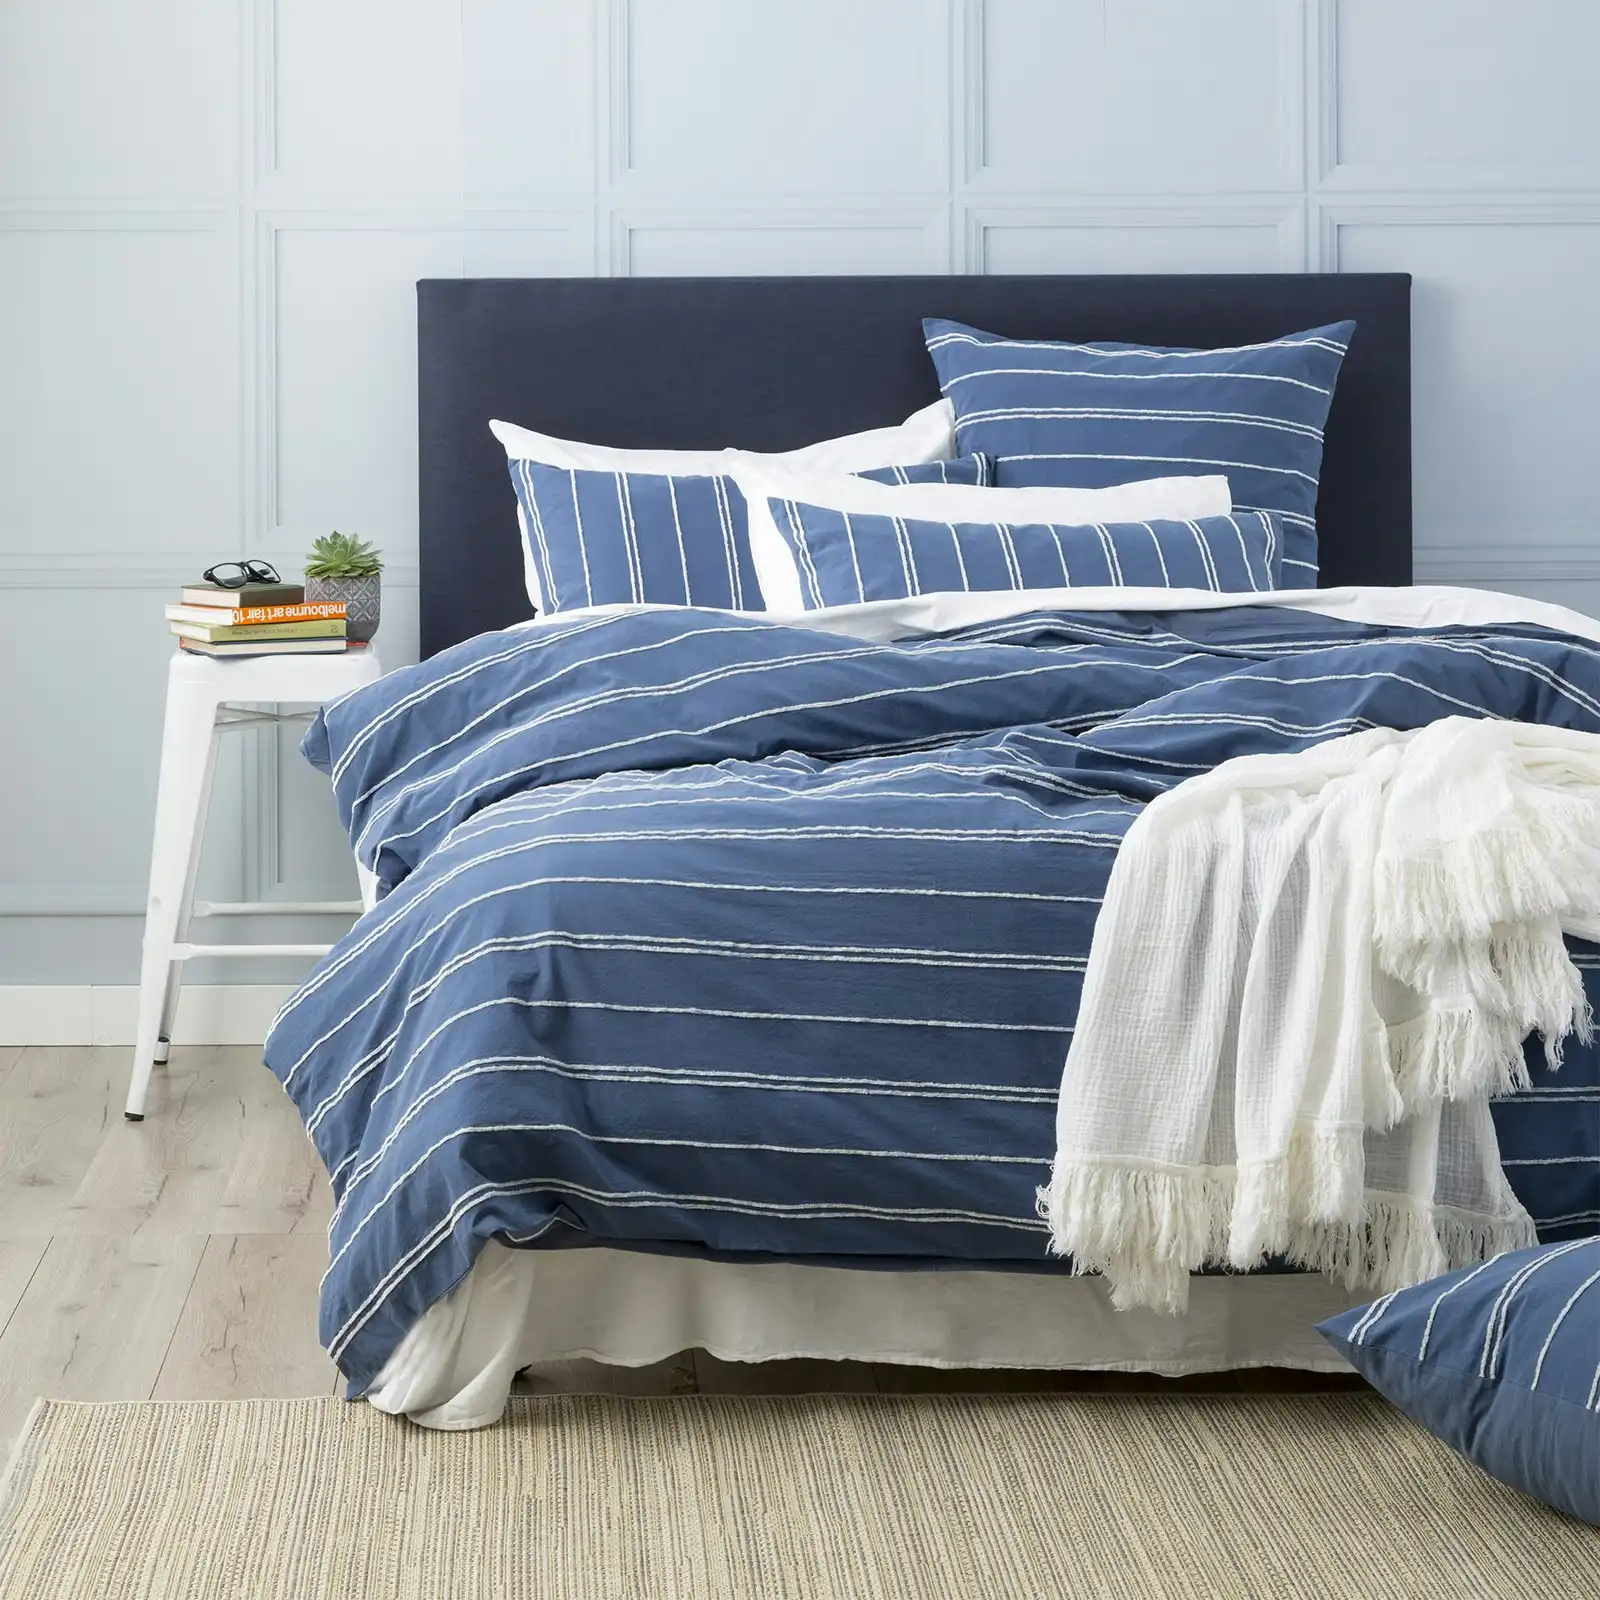 Renee Taylor Hudson Super King Bed Quilt Cover VINT Washed Cotton Chenille Blue